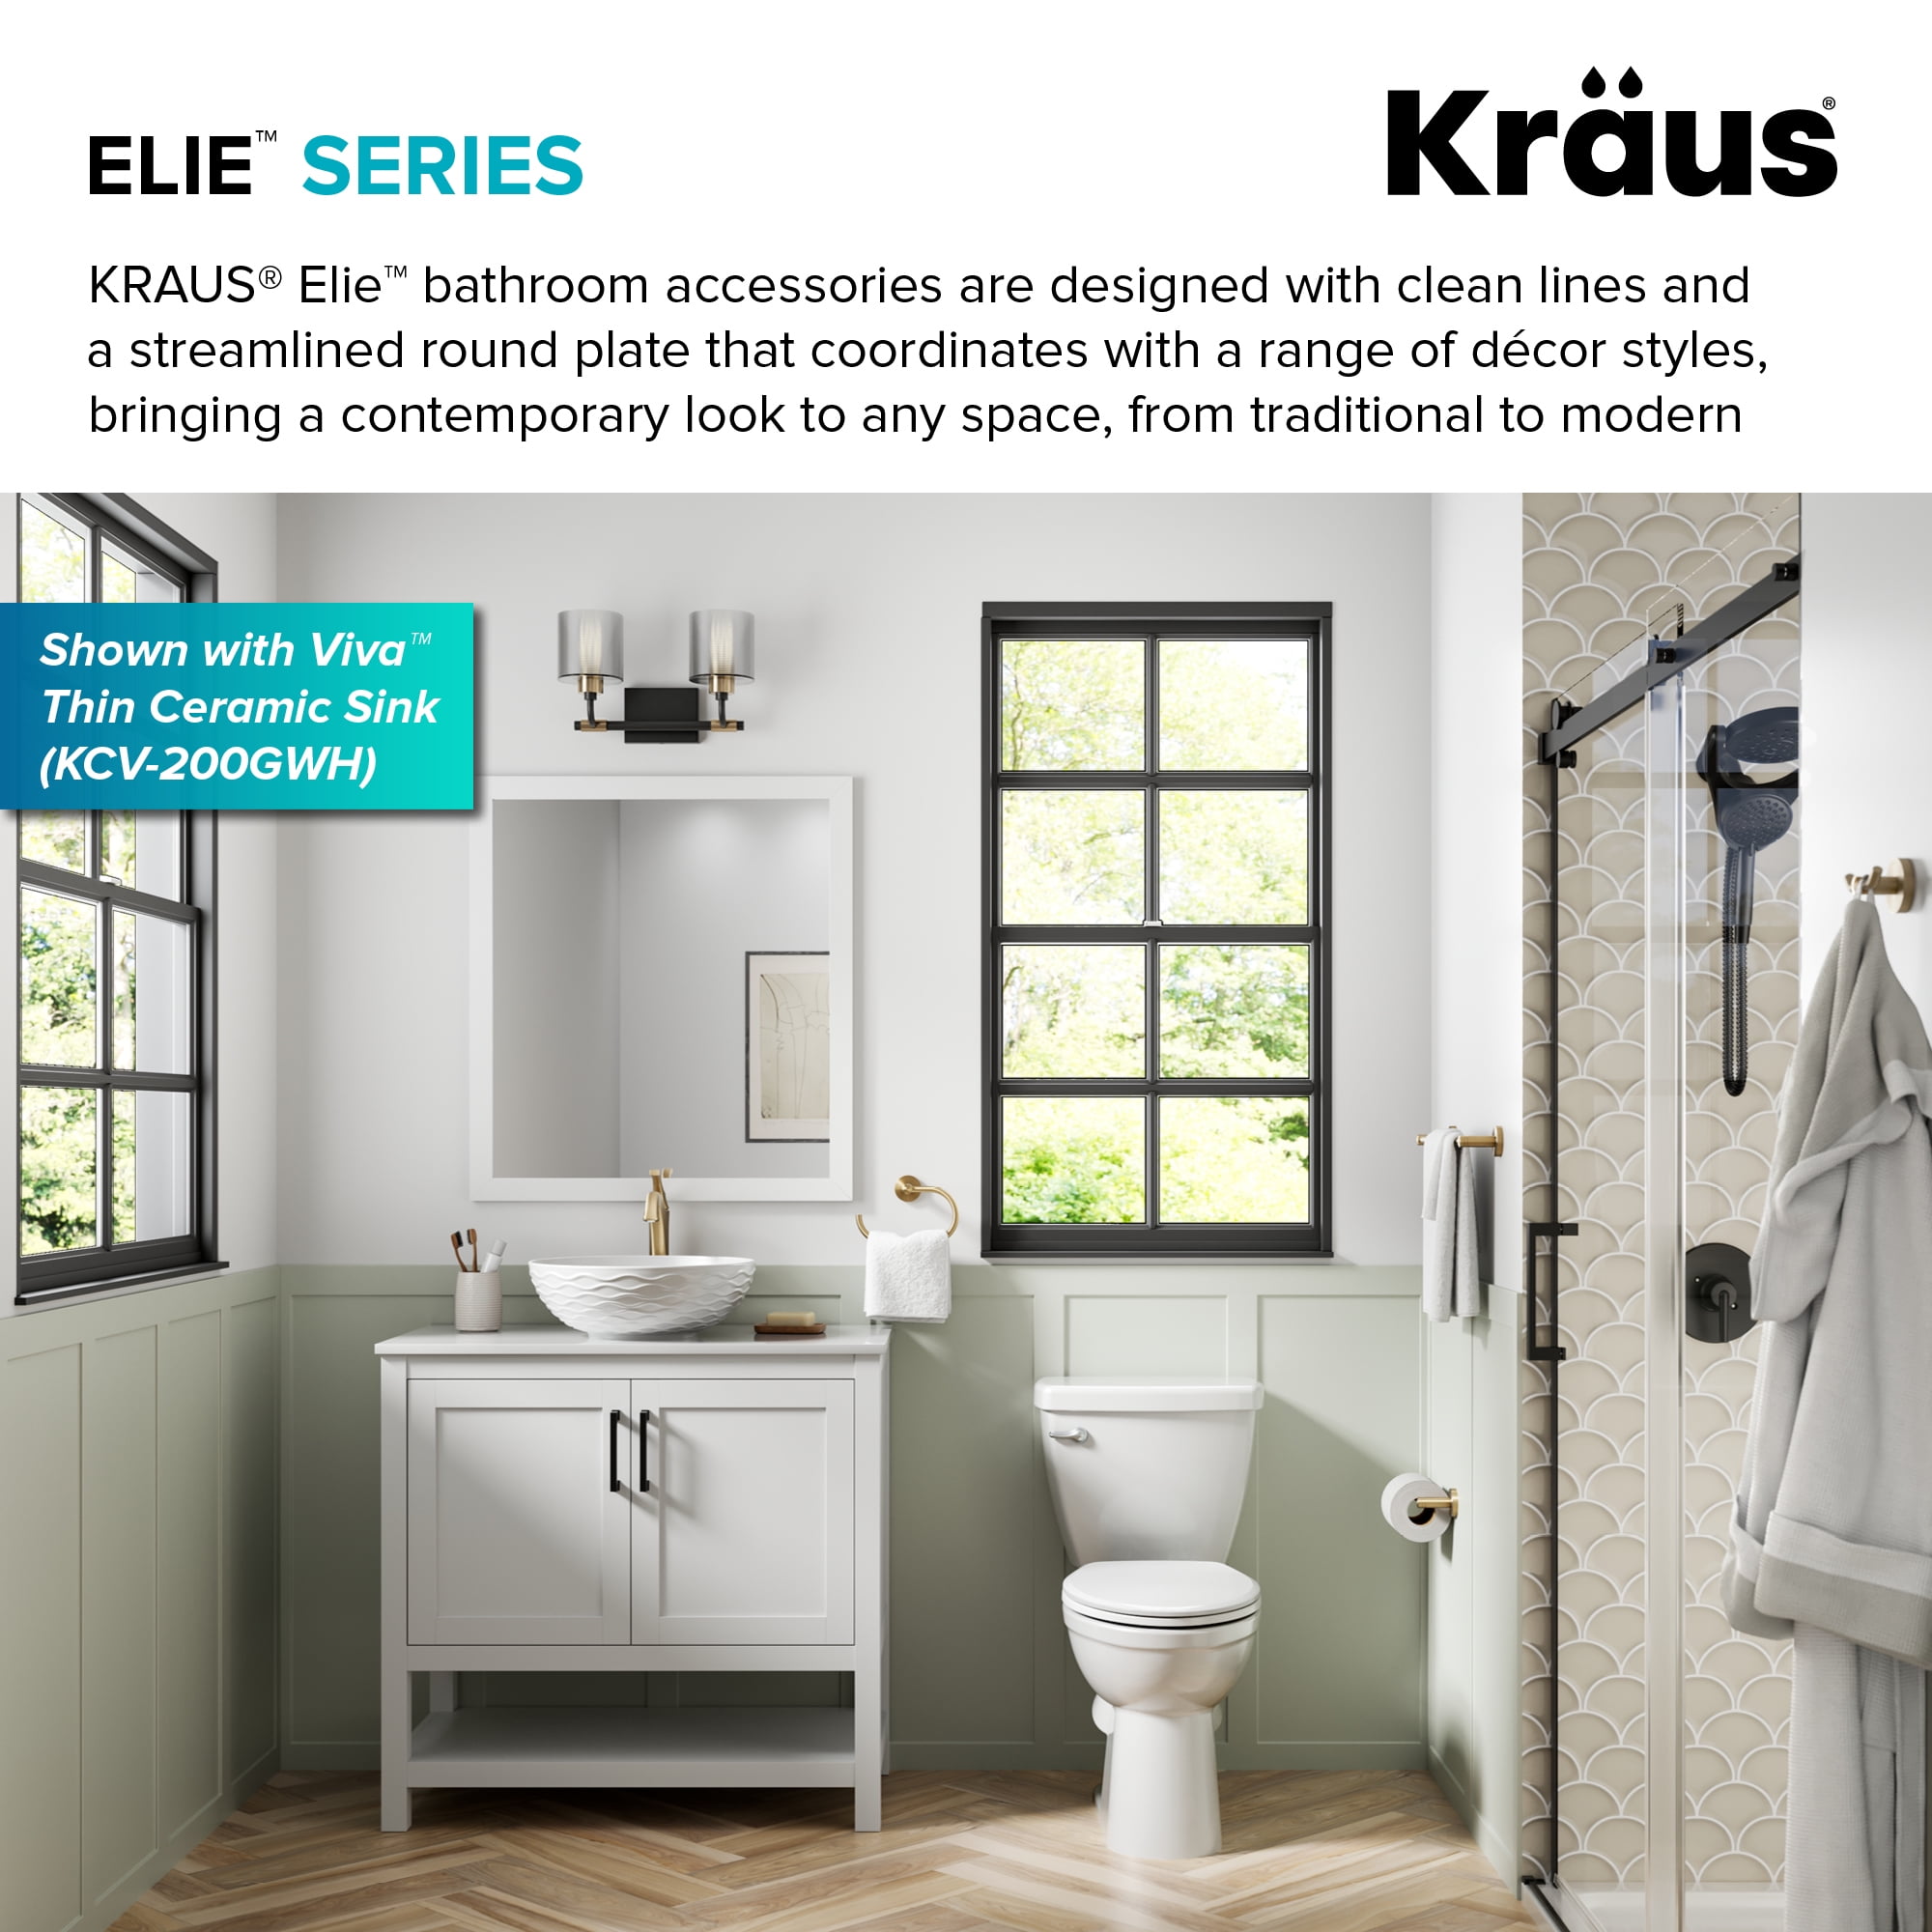 KRAUS Elie 24-inch Bathroom Towel Bar, Chrome Finish, KEA-18837CH - 4